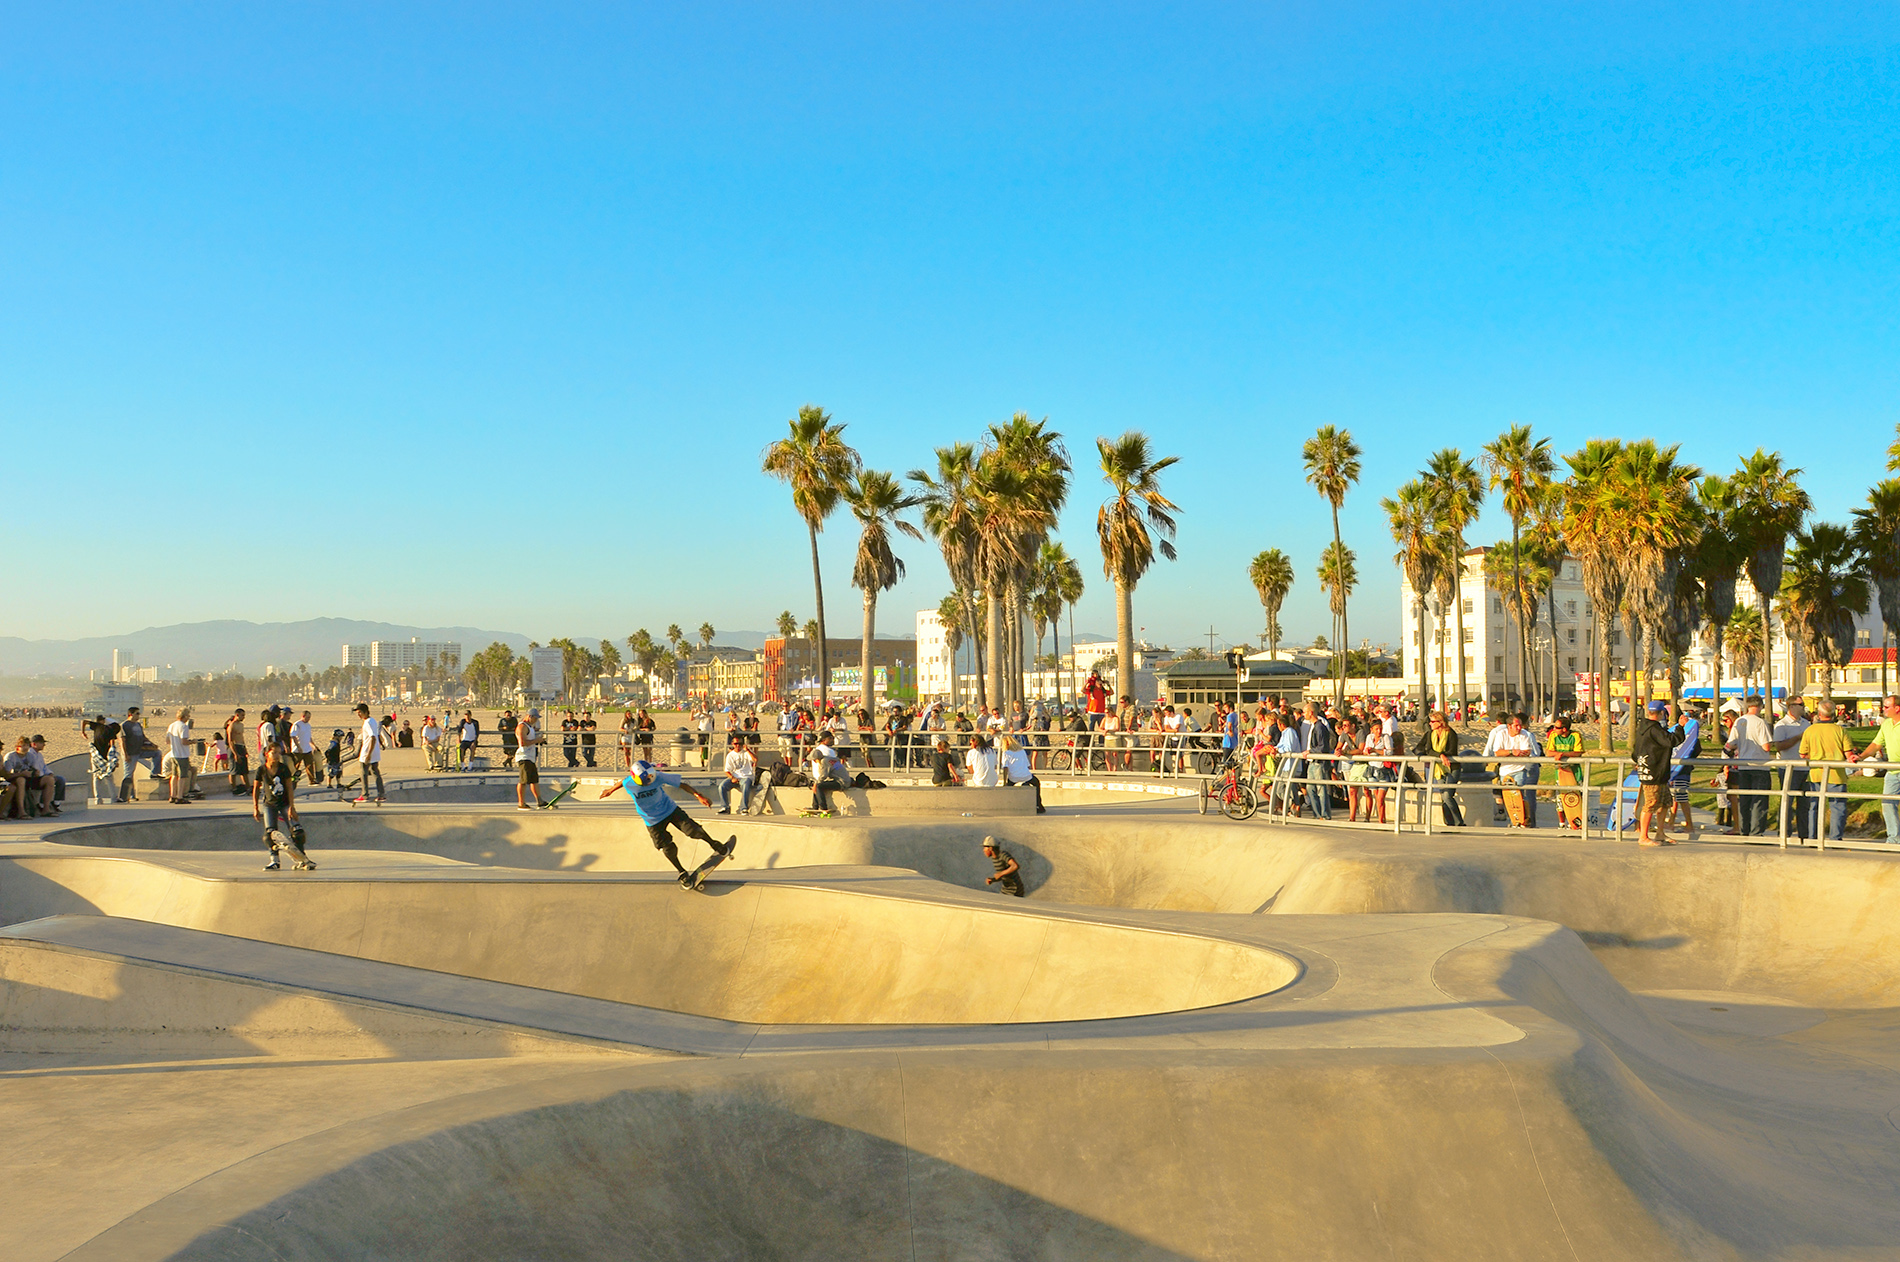 Watch impressive skateboard stunts at the skate park on Venice Beach.